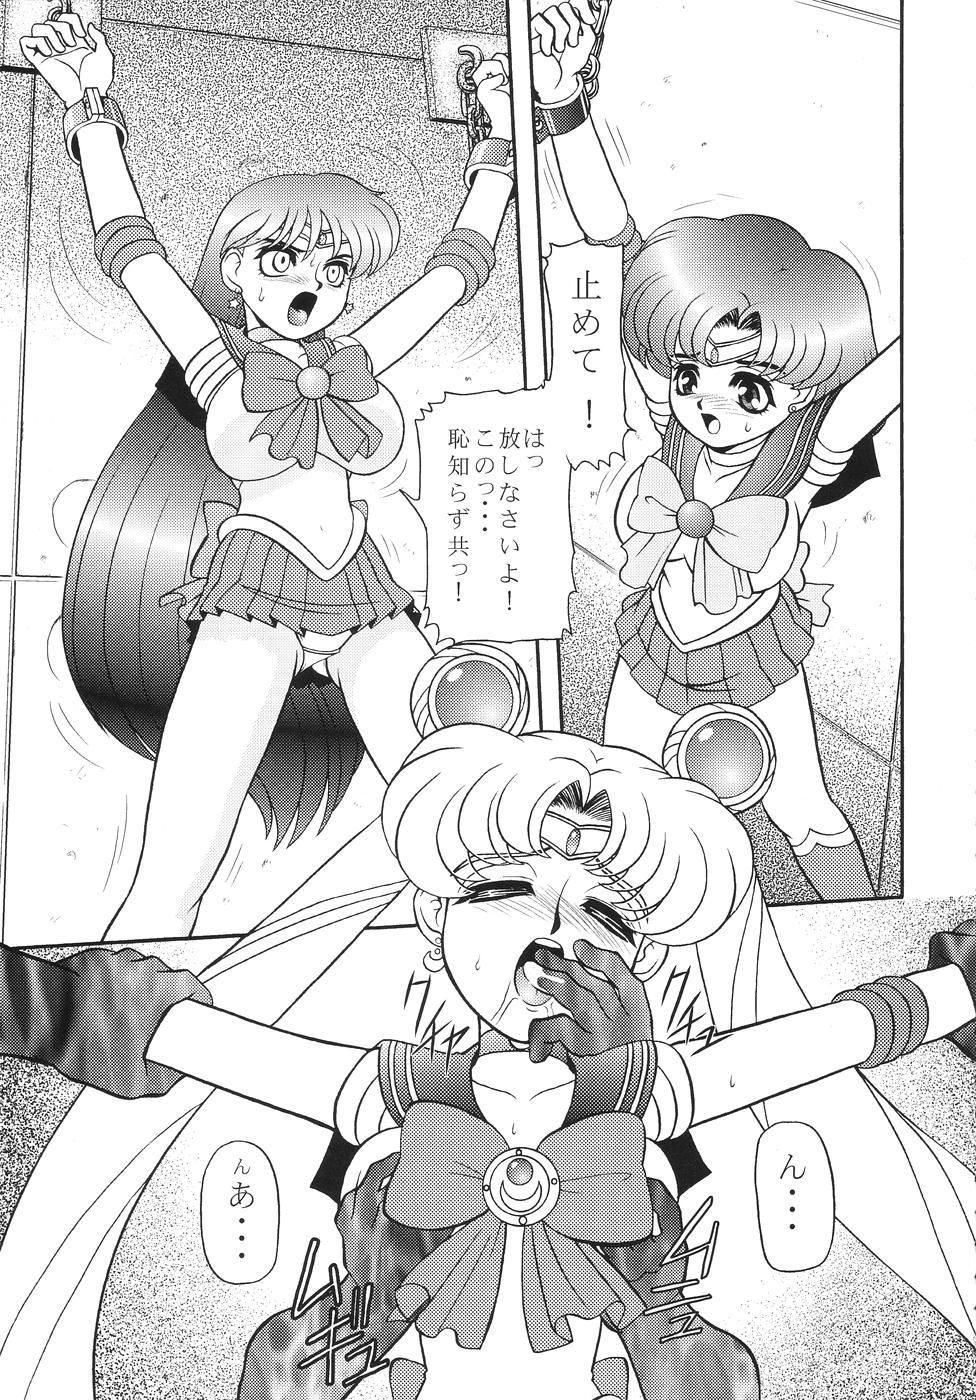 Insertion GETUJOKU - Maki no Ni - Sailor moon Instagram - Page 4